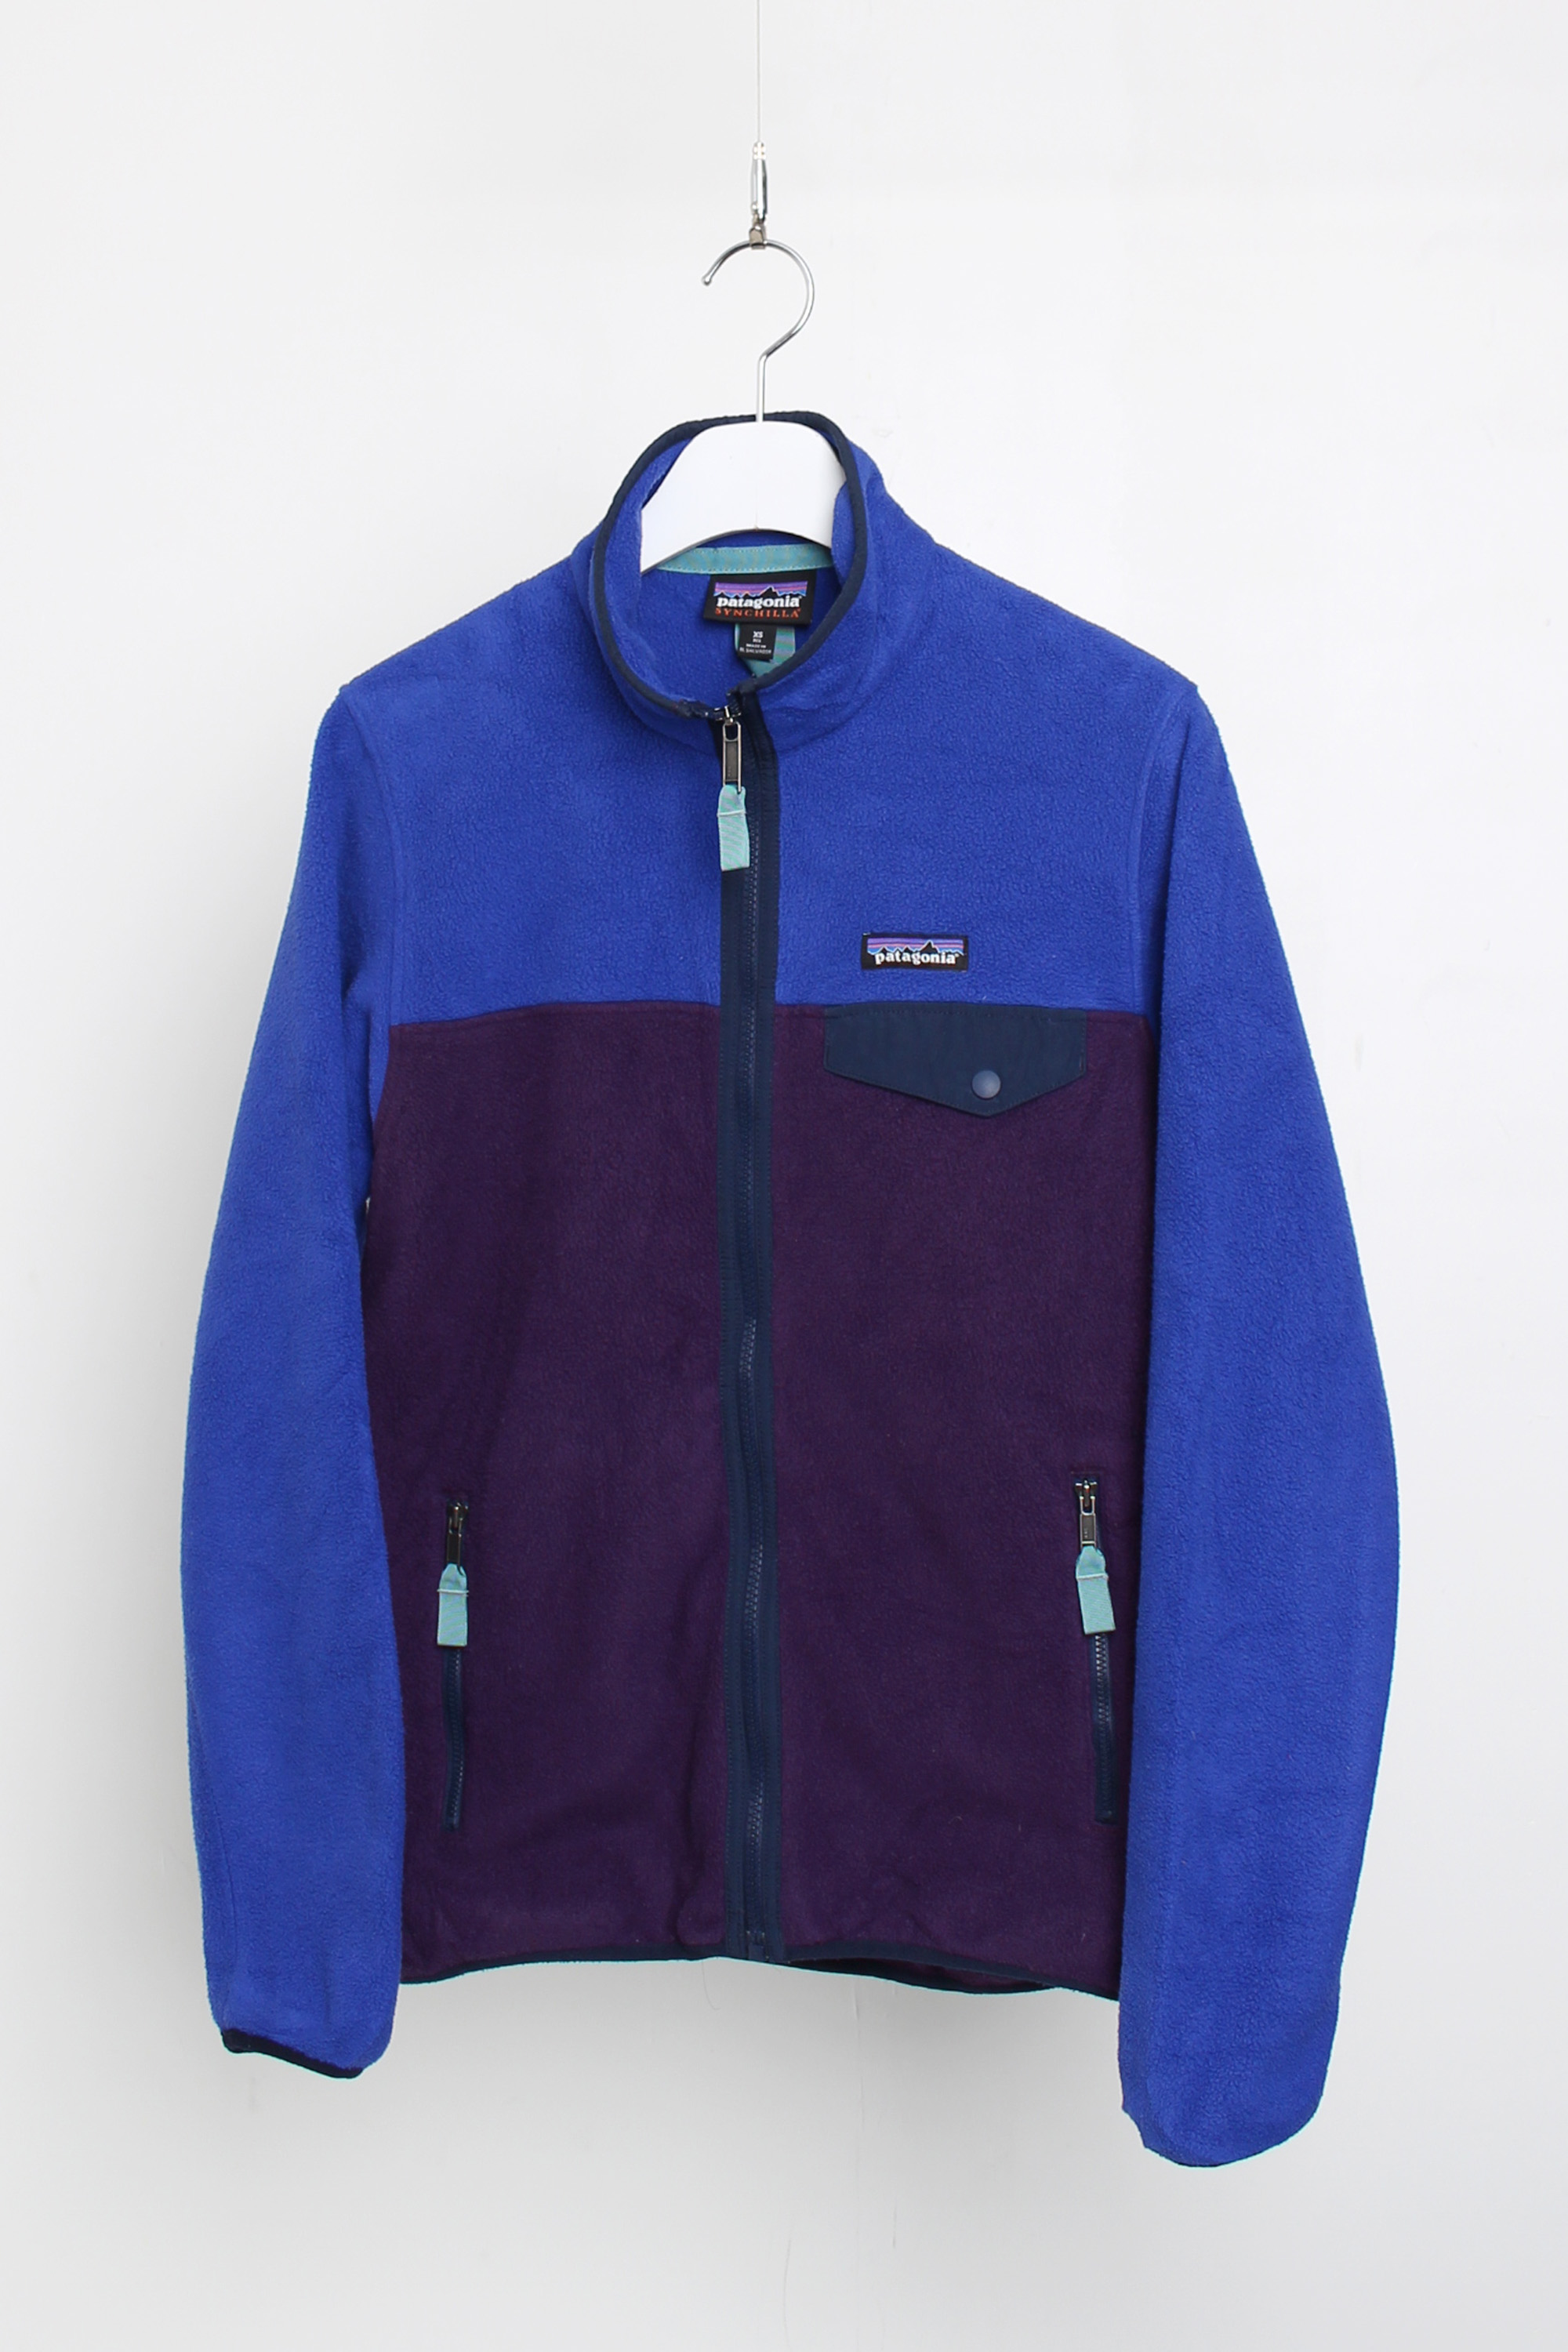 patagonia synchilla jacket